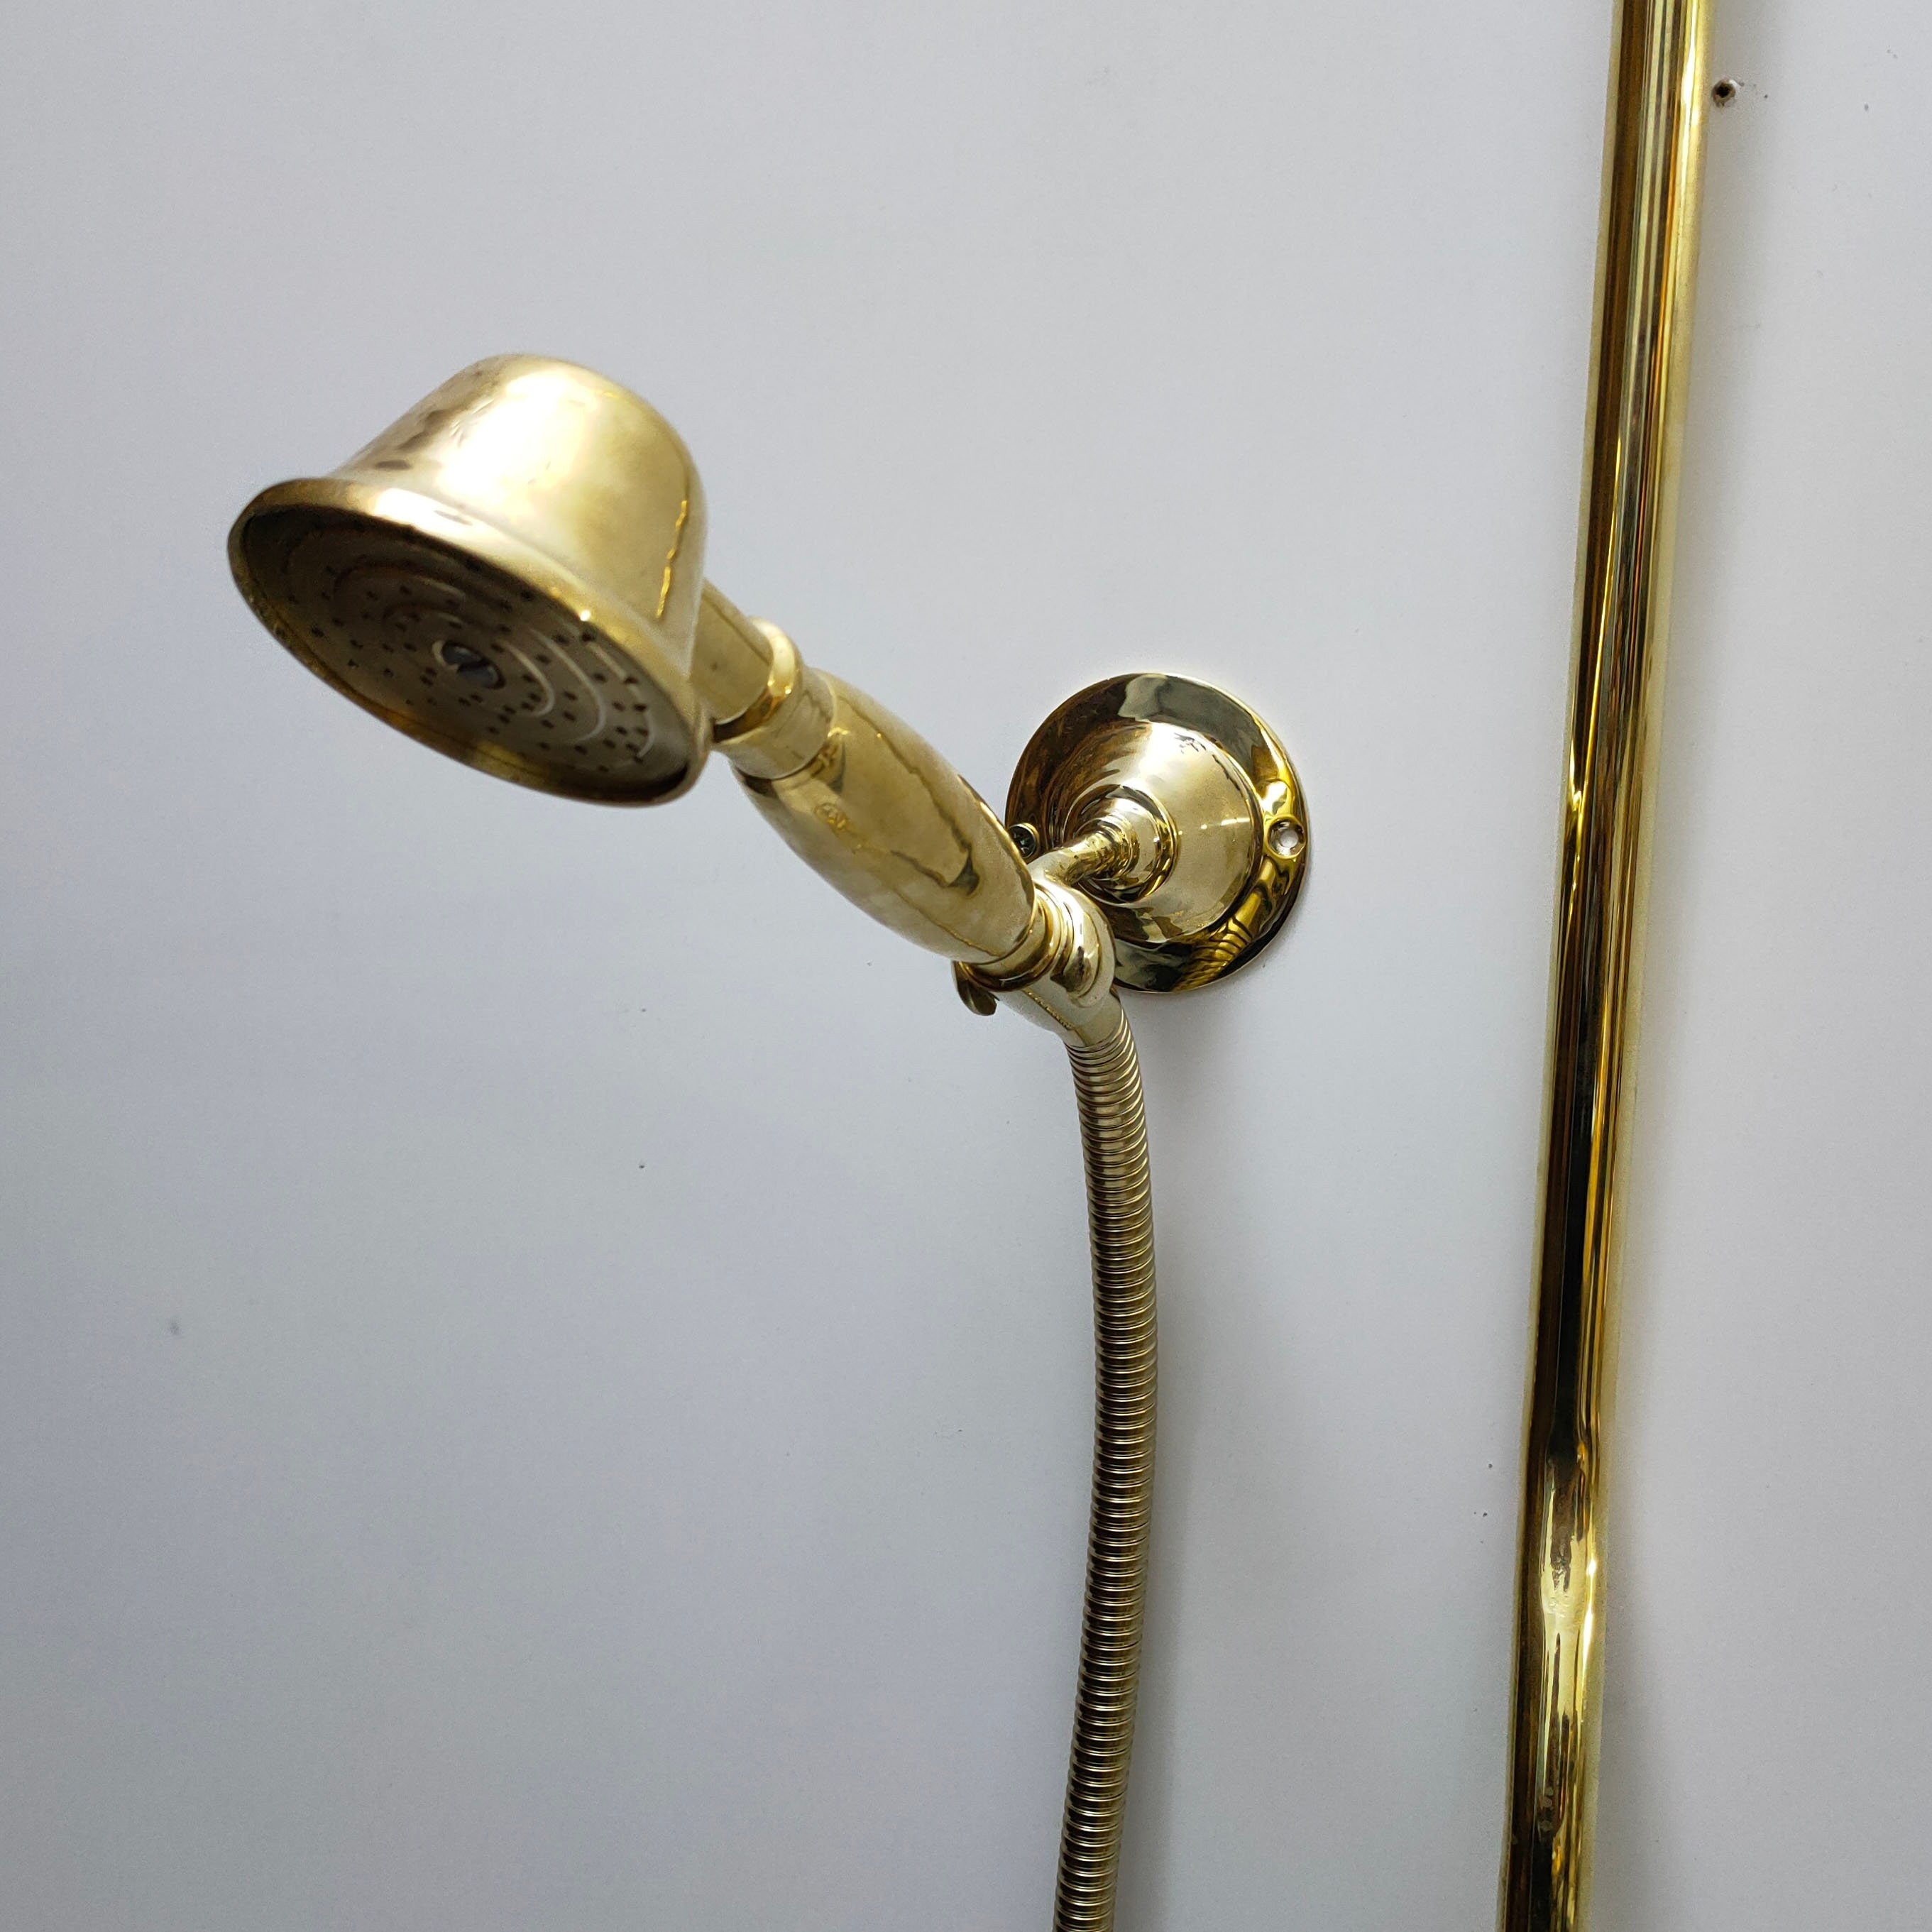 Solid Brass Bath Shower Mixer with Rigid Riser Kit 8" Round Shower Head - Zayian